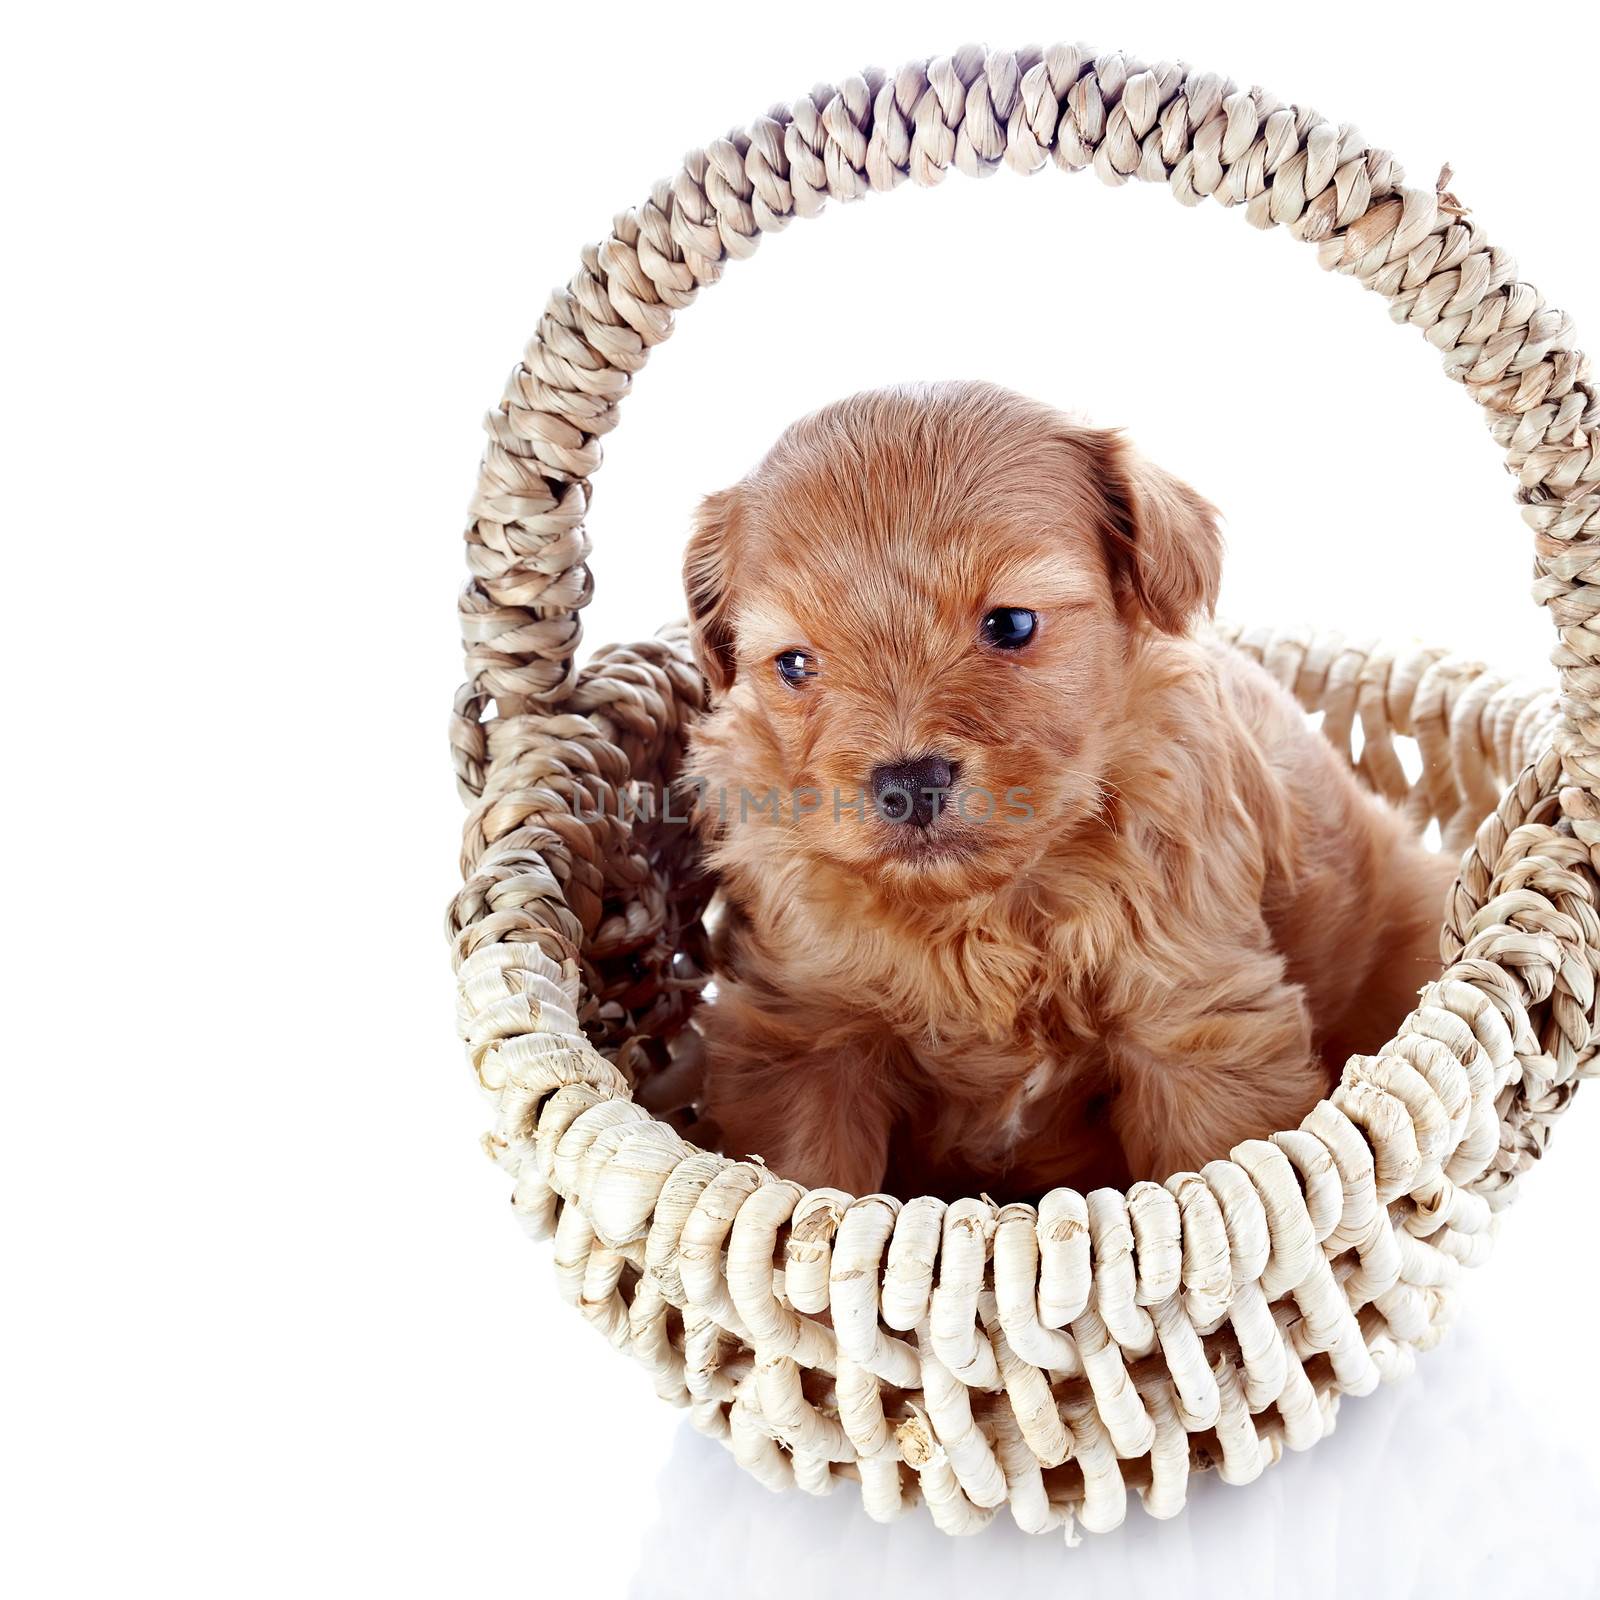 Puppy in a wattled basket by Azaliya